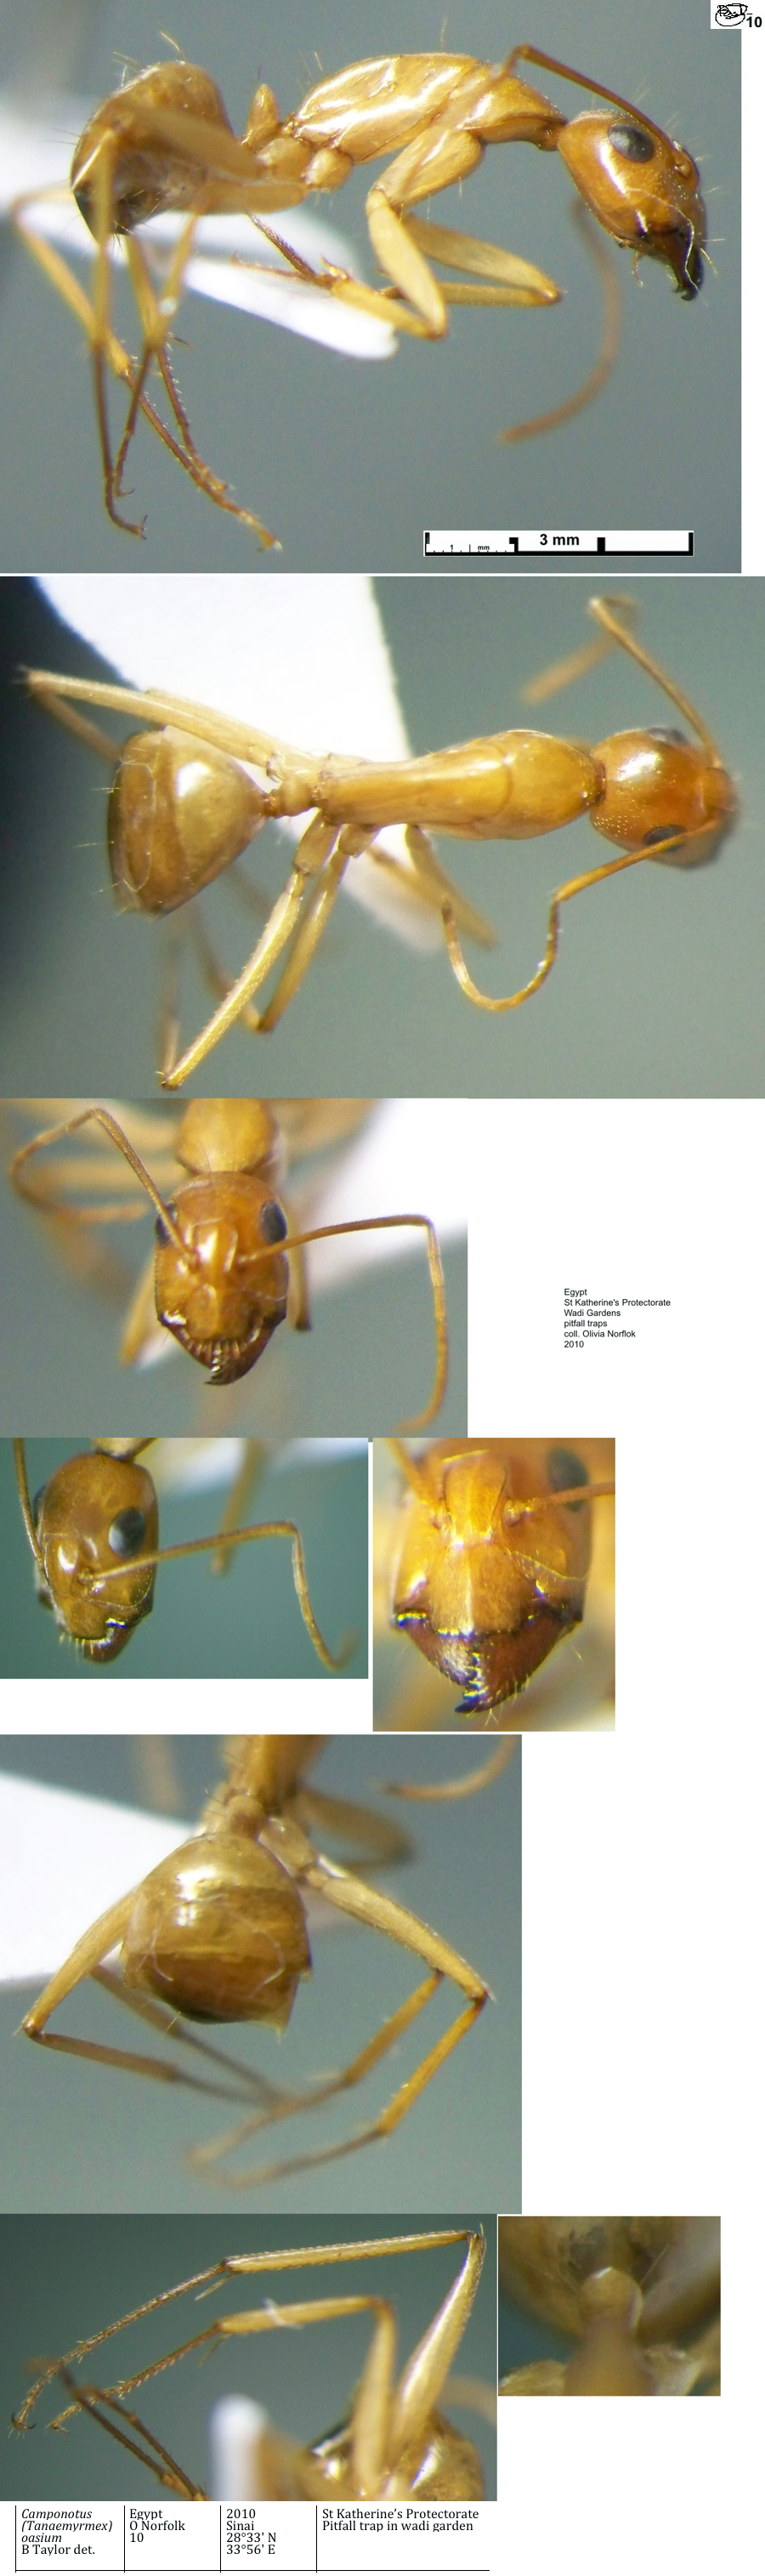 {Camponotus (Tanaemyrmex) oasium minor}